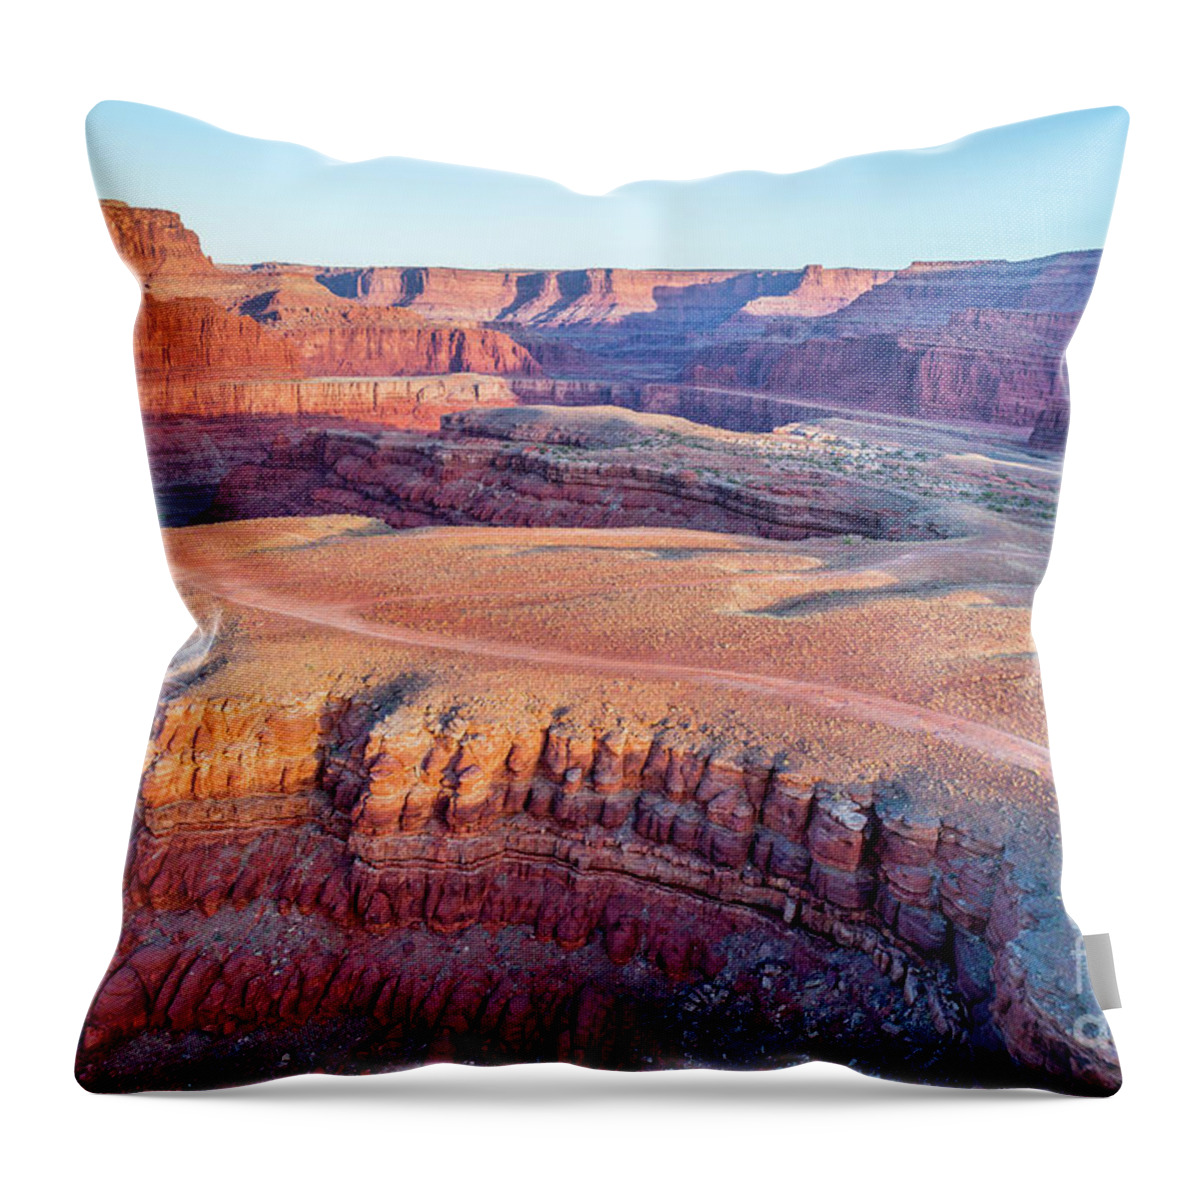 Colorado River Throw Pillow featuring the photograph aerial view of Colorado RIver canyon by Marek Uliasz